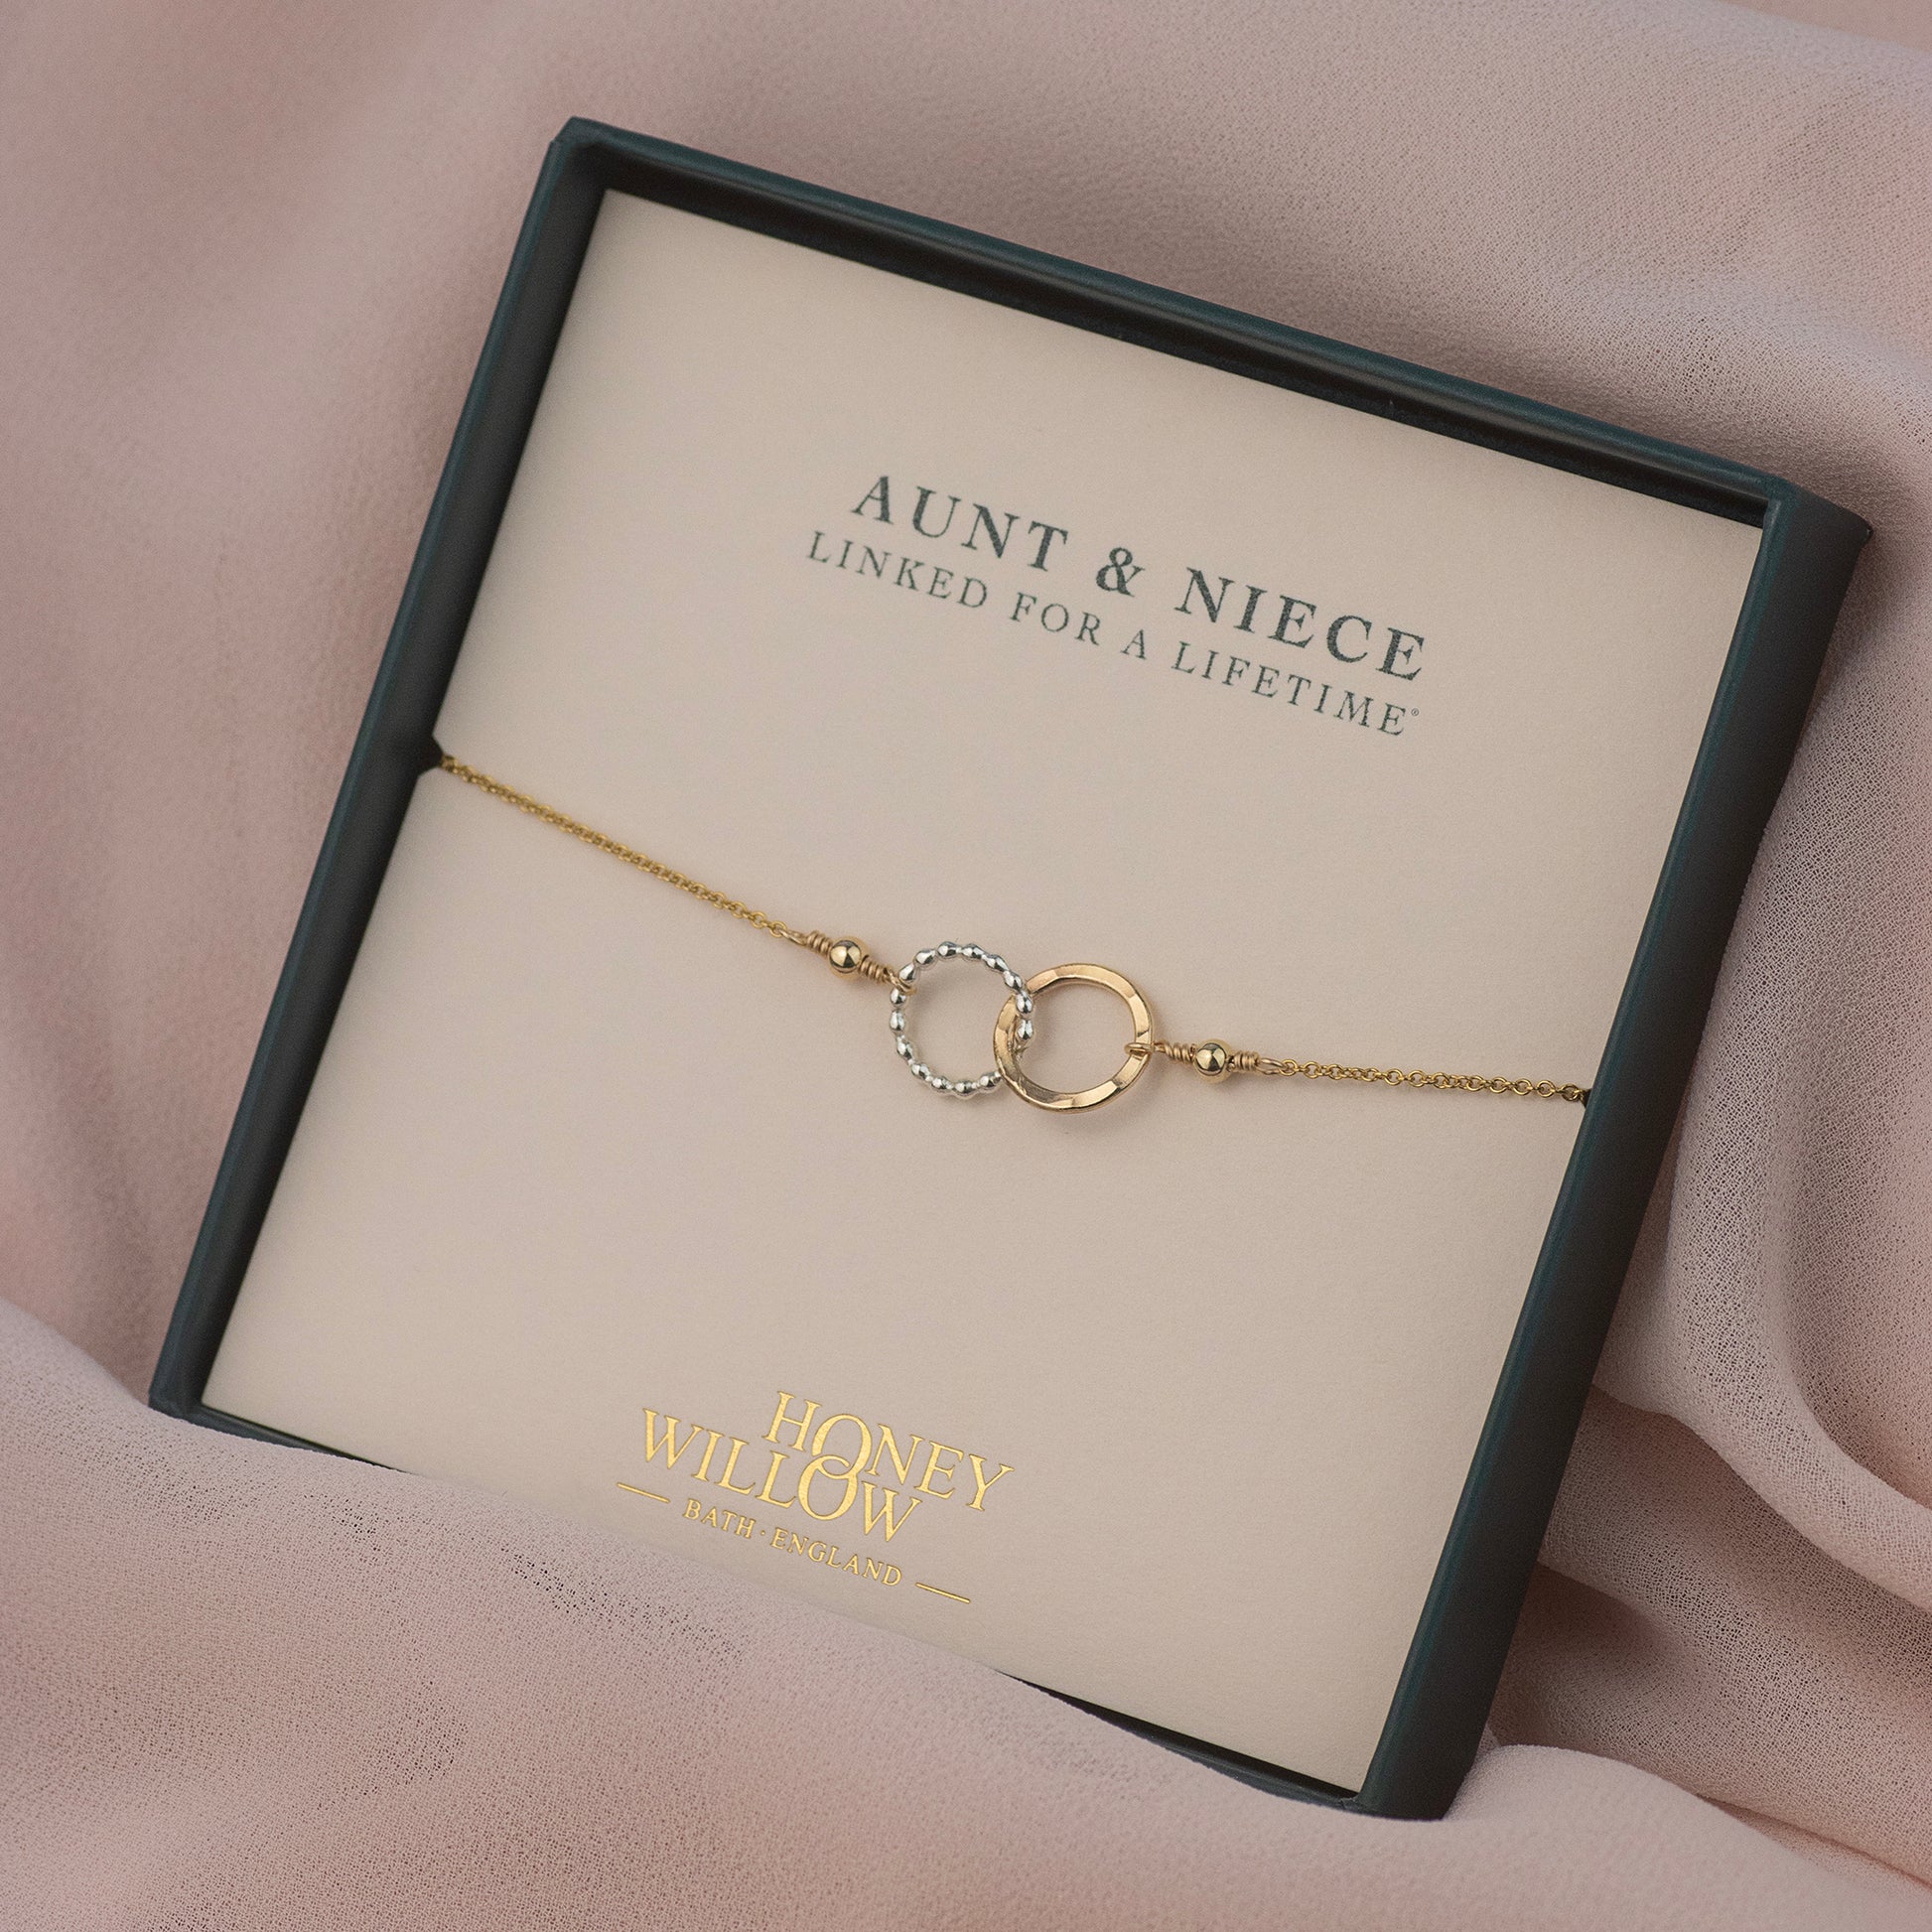 Aunt & Niece Gift - Love Link Bracelet - Silver & Gold